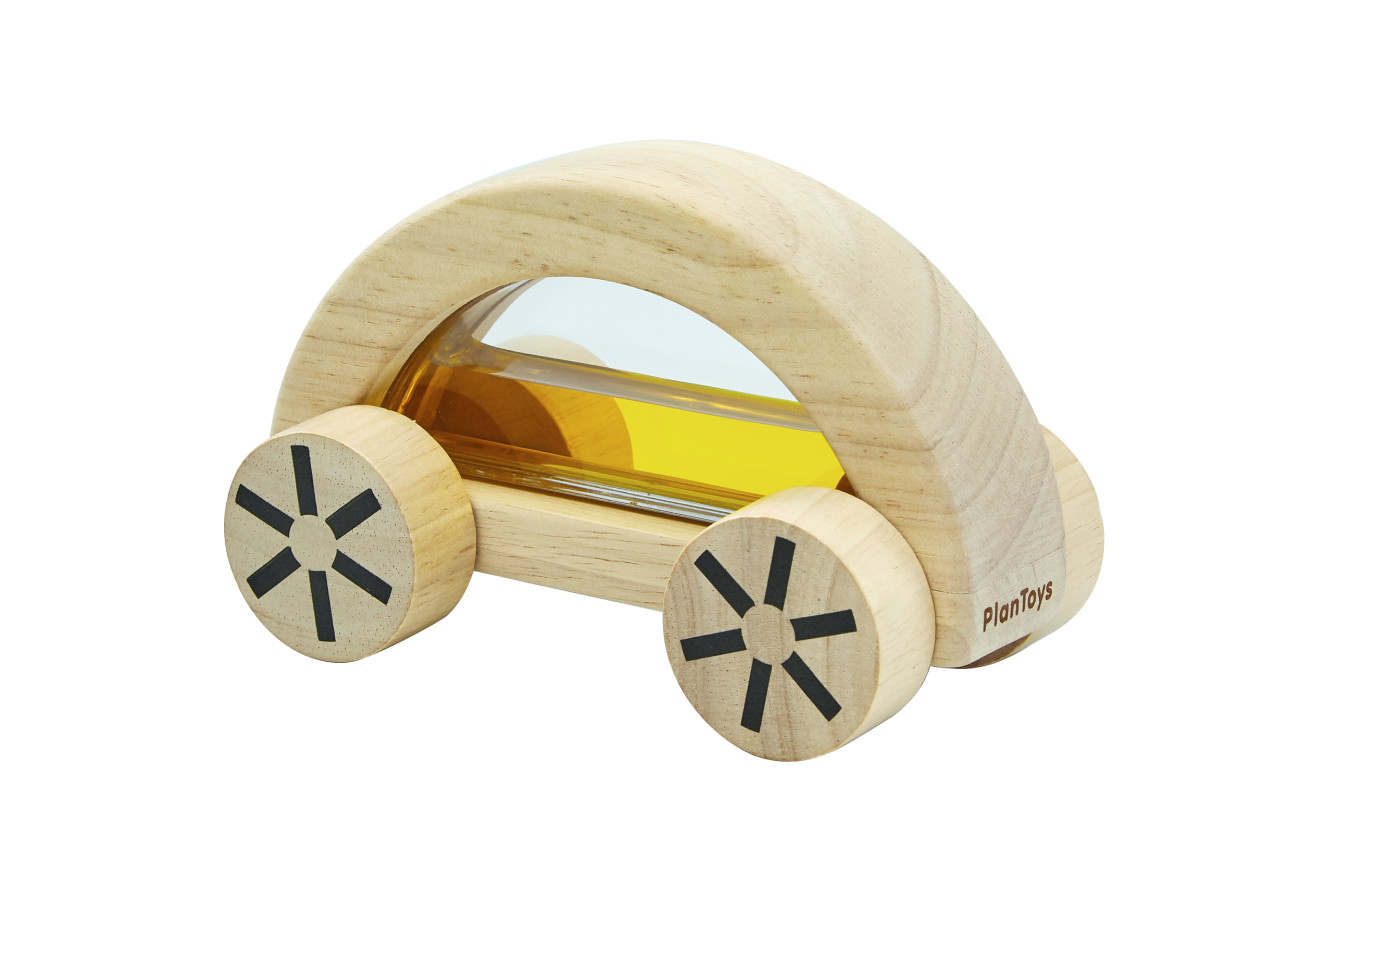 Plan Toys - Wautomobile - Yellow